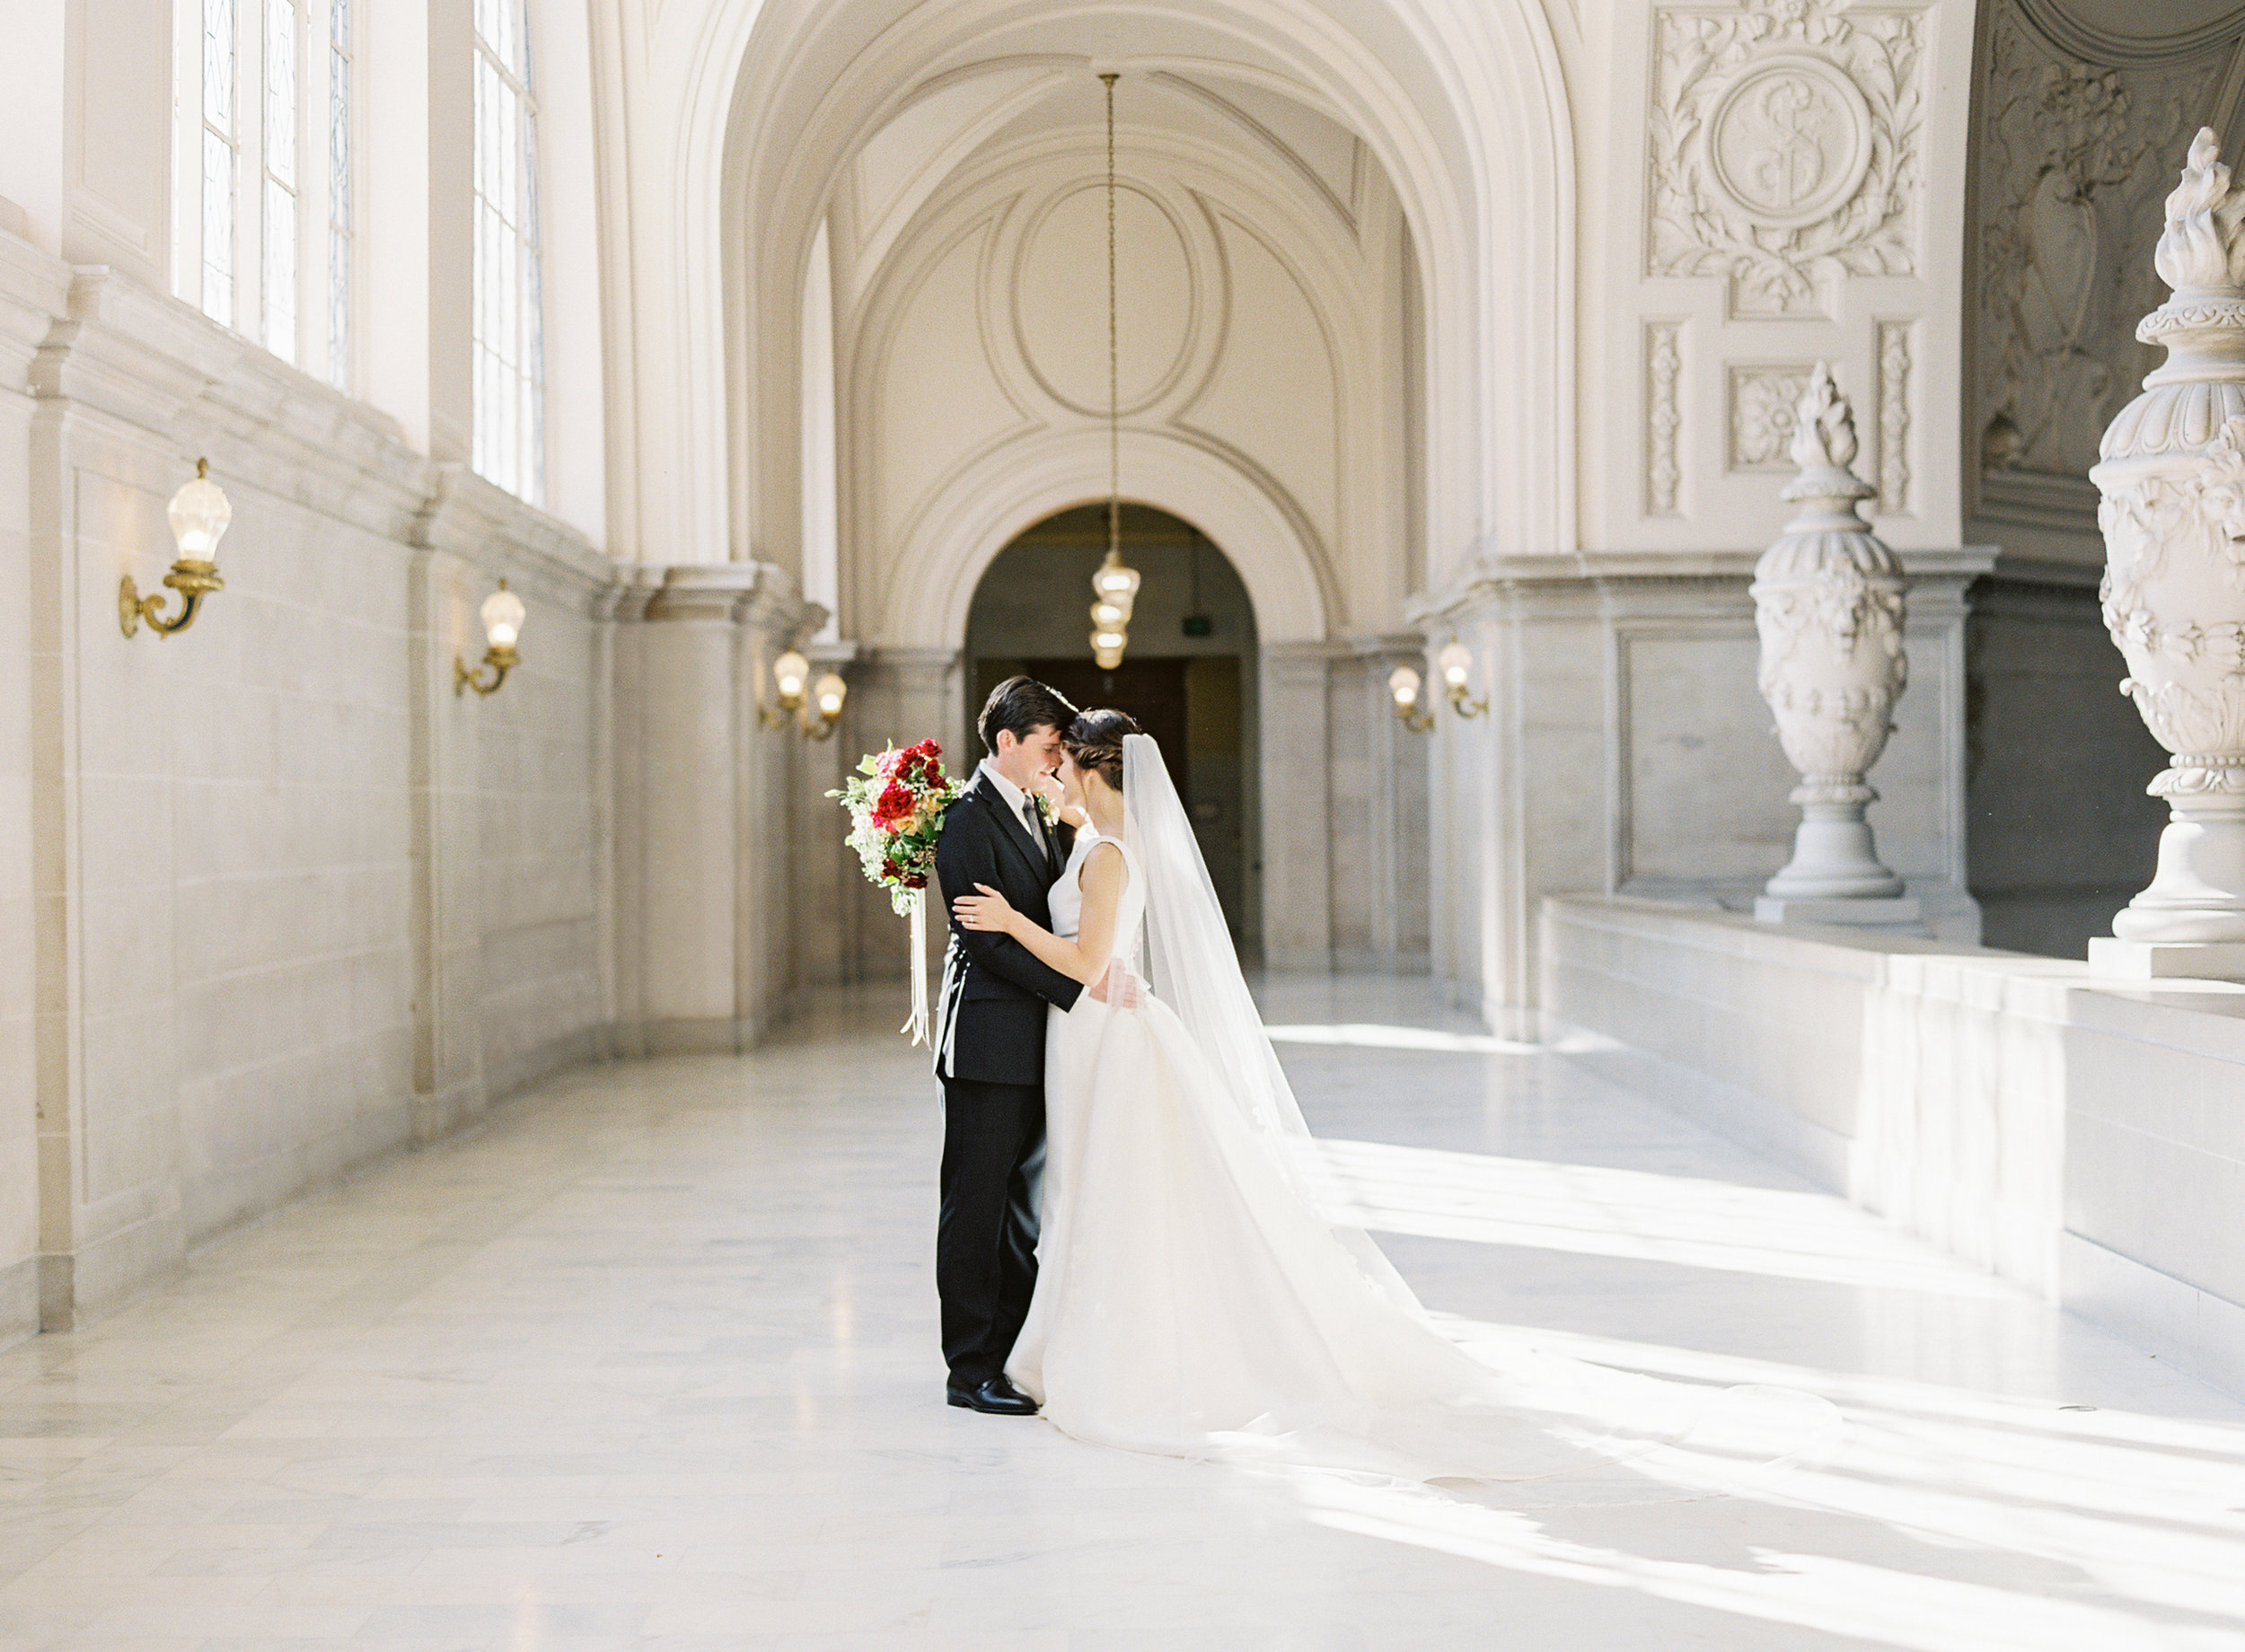 Meghan Mehan Photography - California Wedding Photographer | San Francisco City Hall Wedding 030.jpg